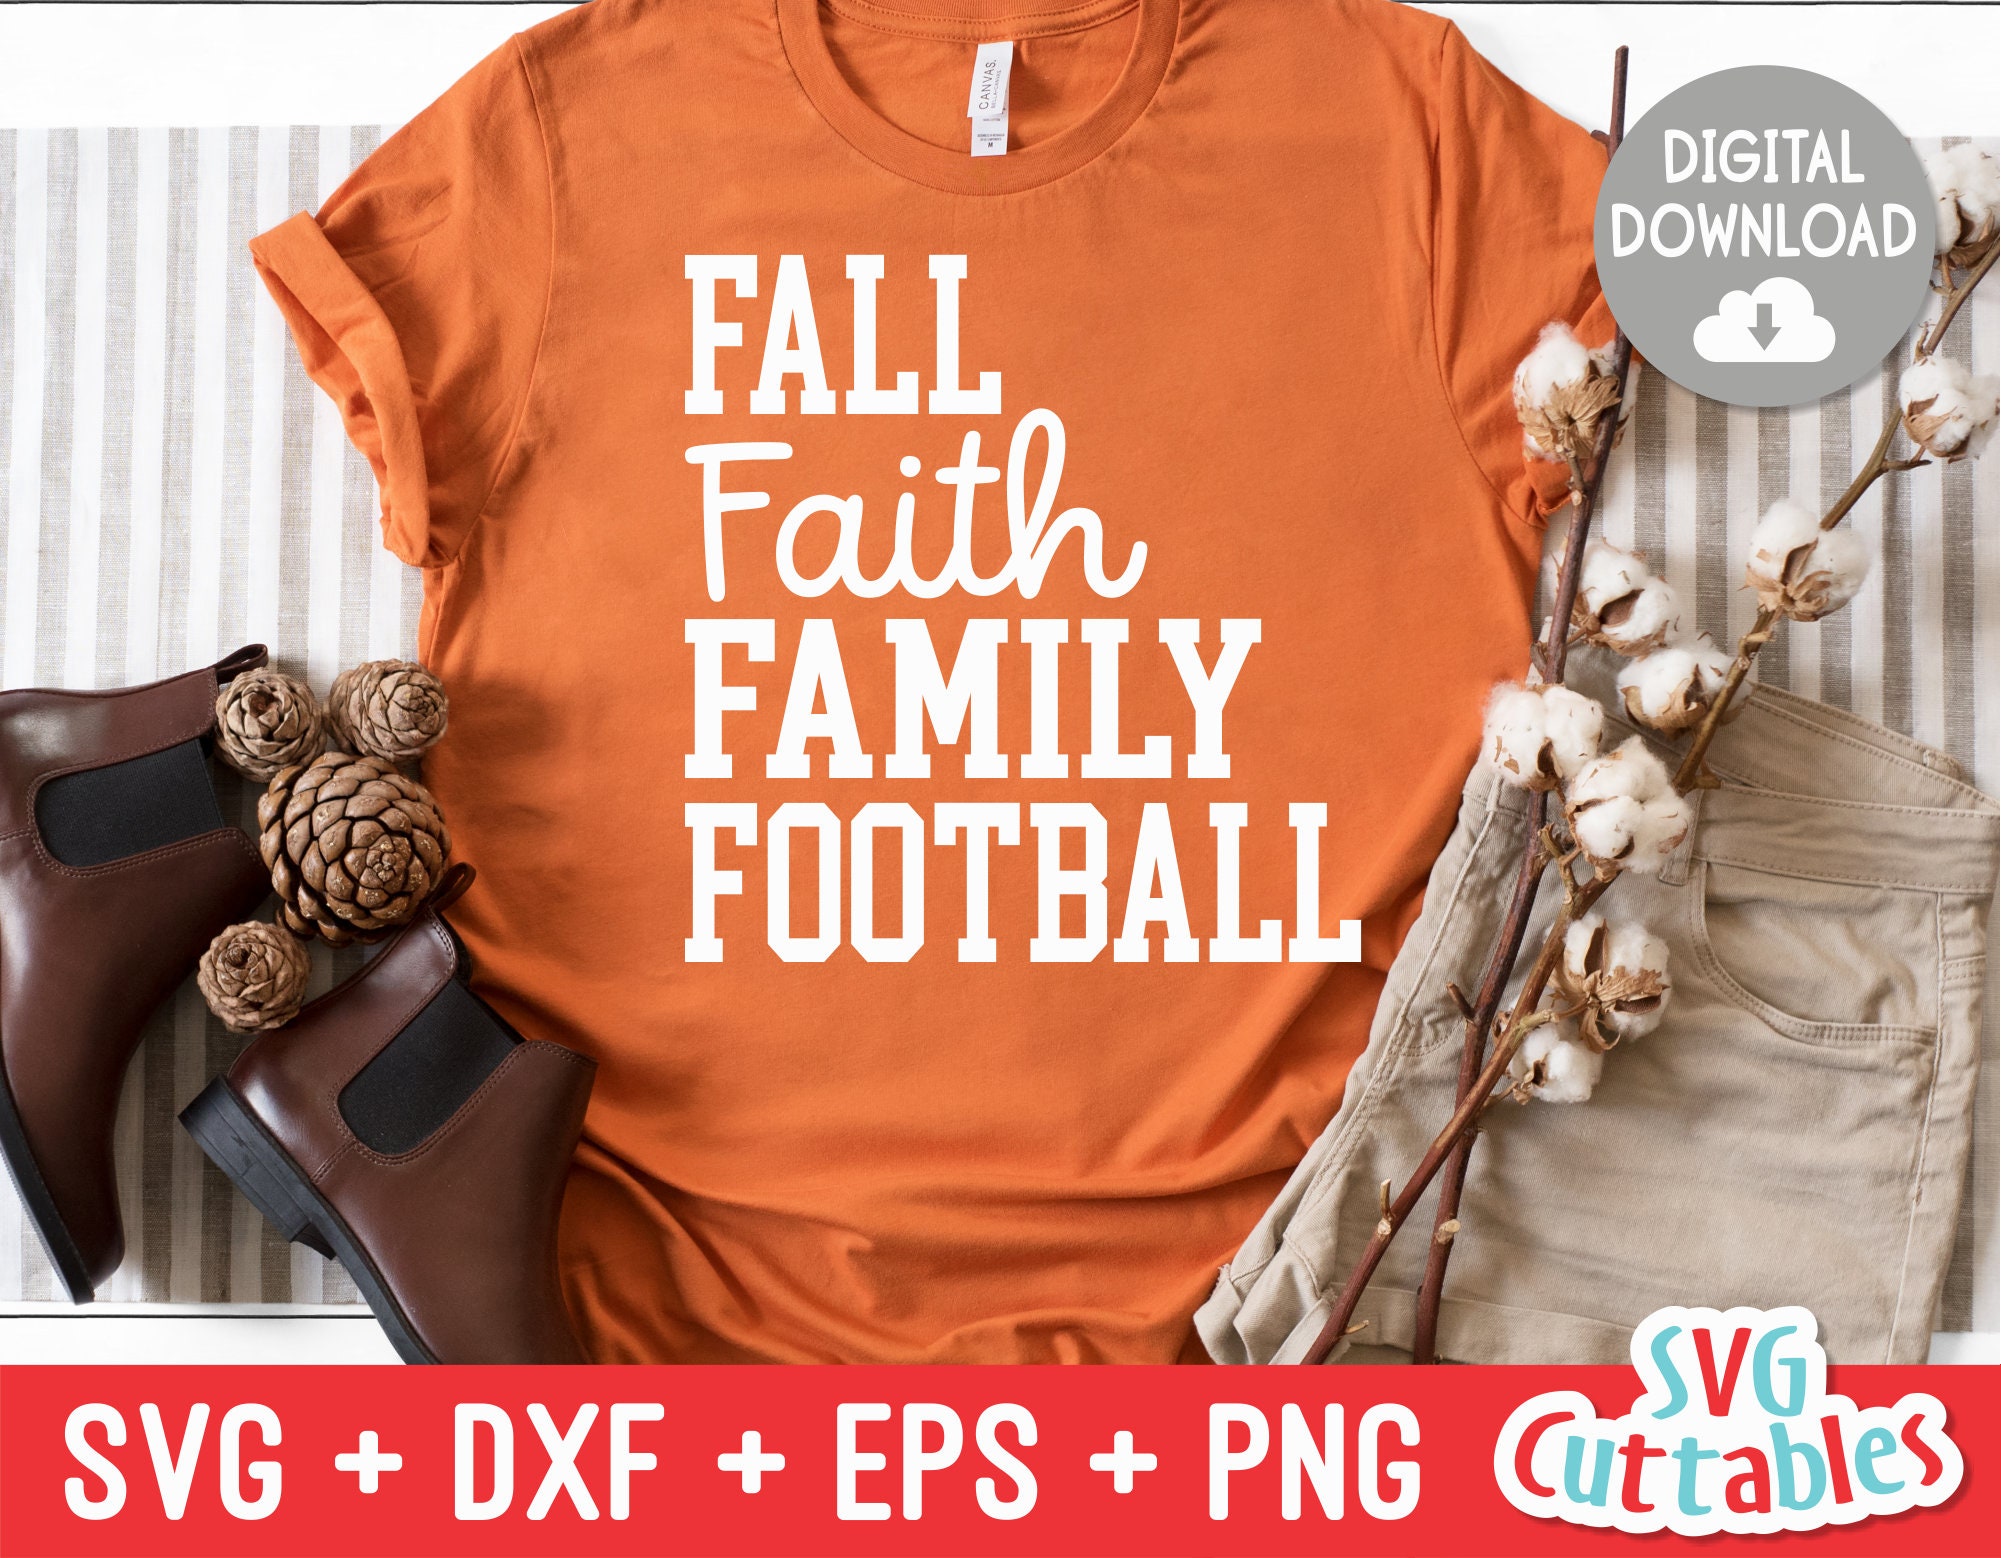 Fall Faith Family Football svg dxf eps png Fall | Etsy